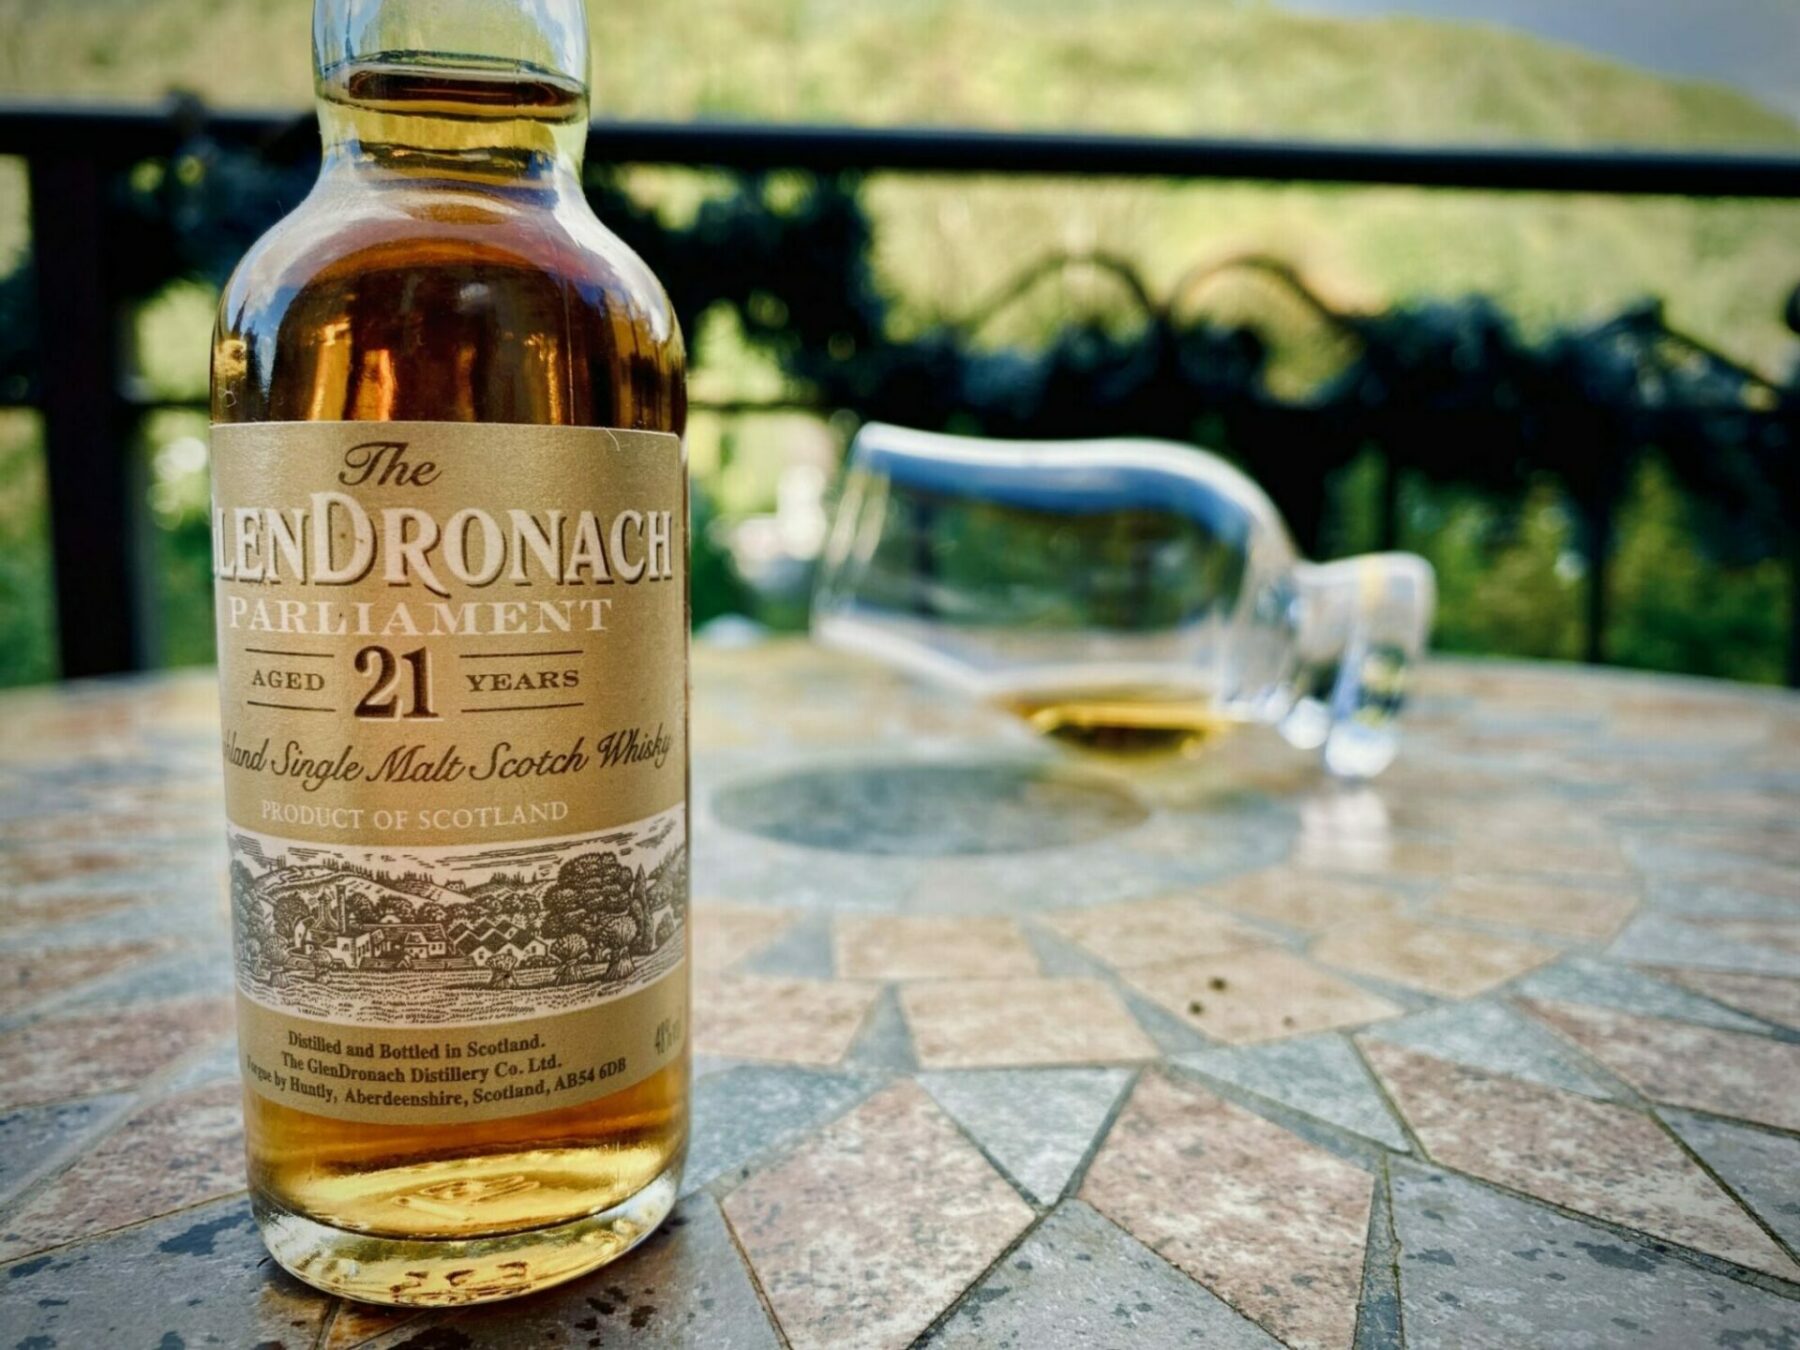 Glendronach 21 Jahre Parliament Highland Single Malt Scotch Whisky